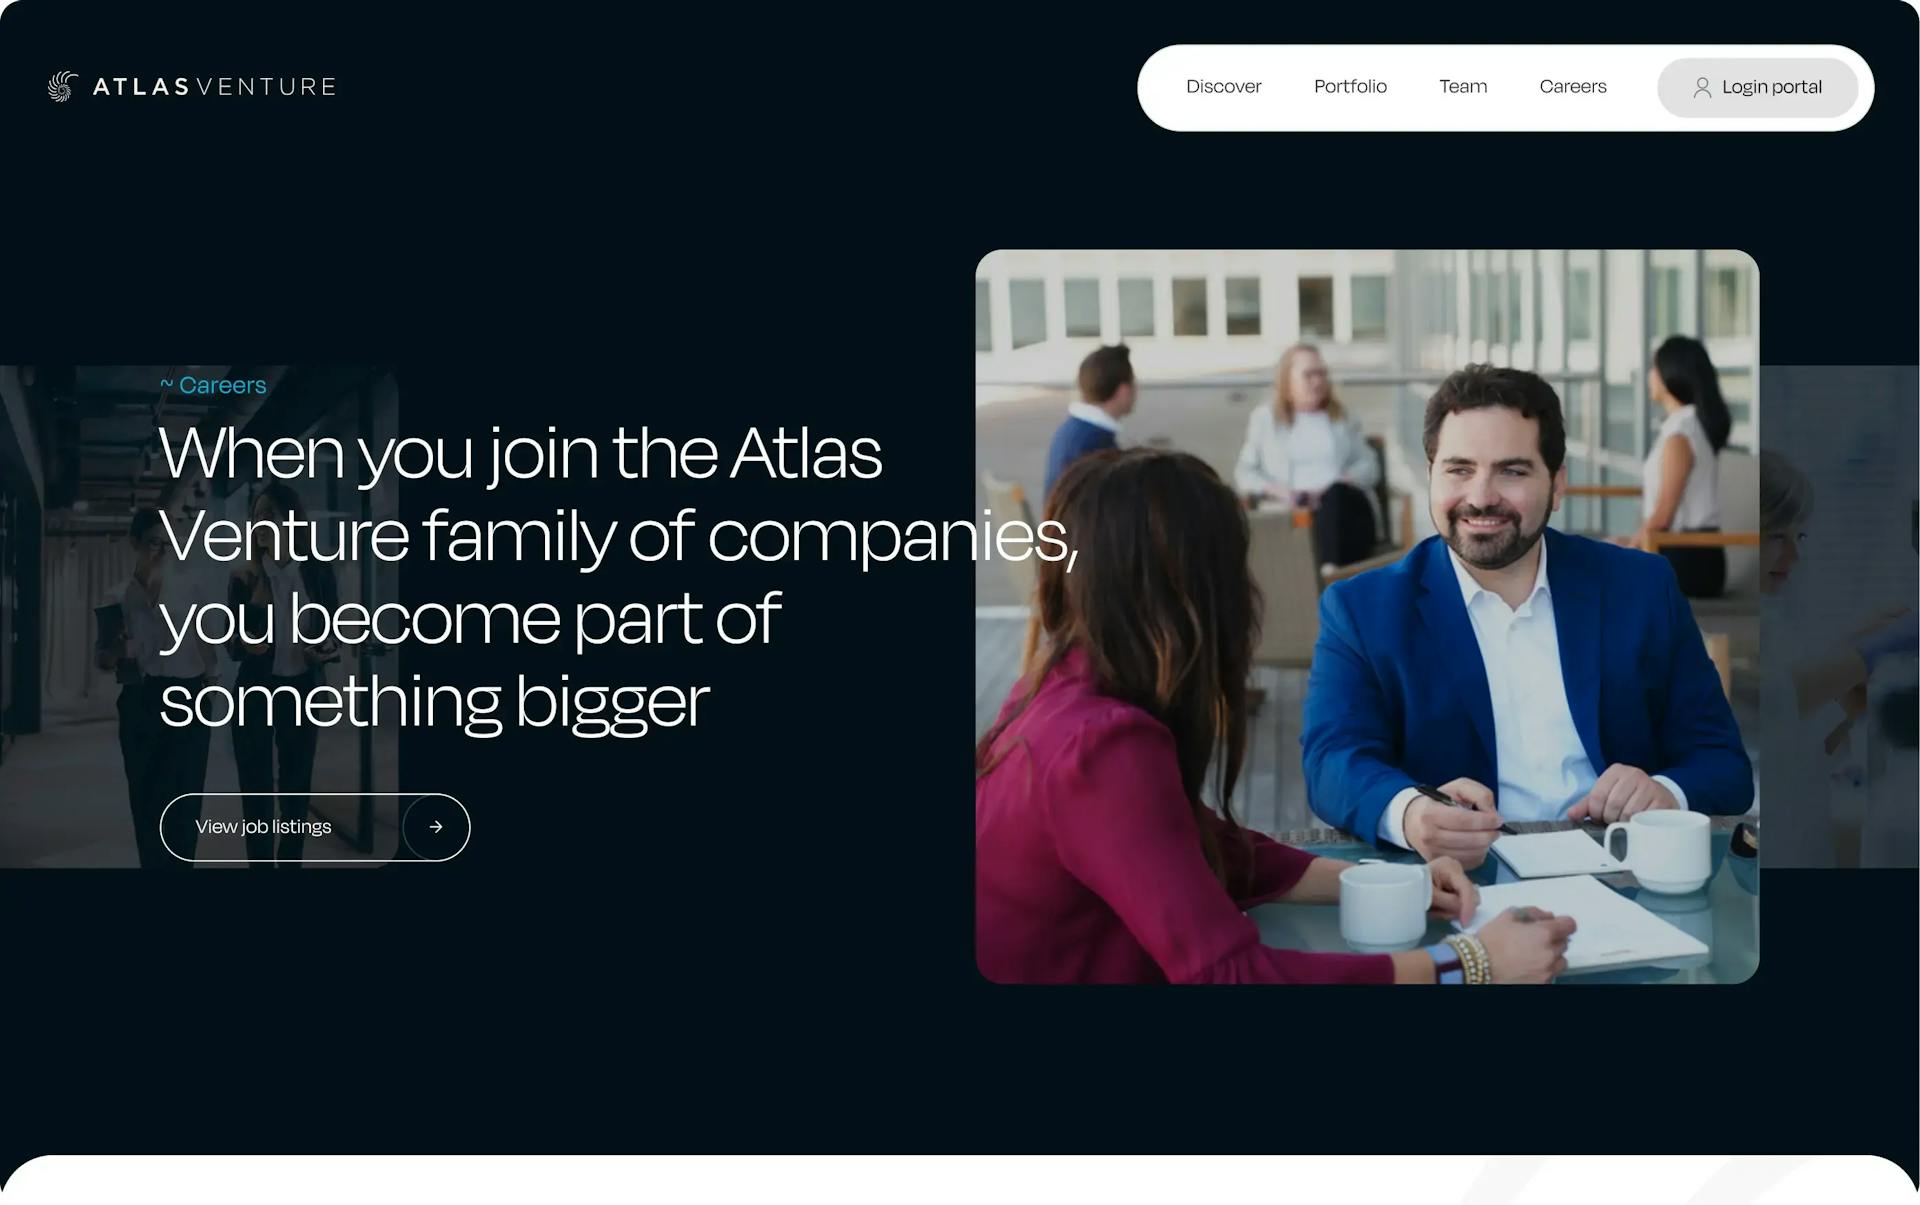 Screenshot of image carousel on Atlas Venture website